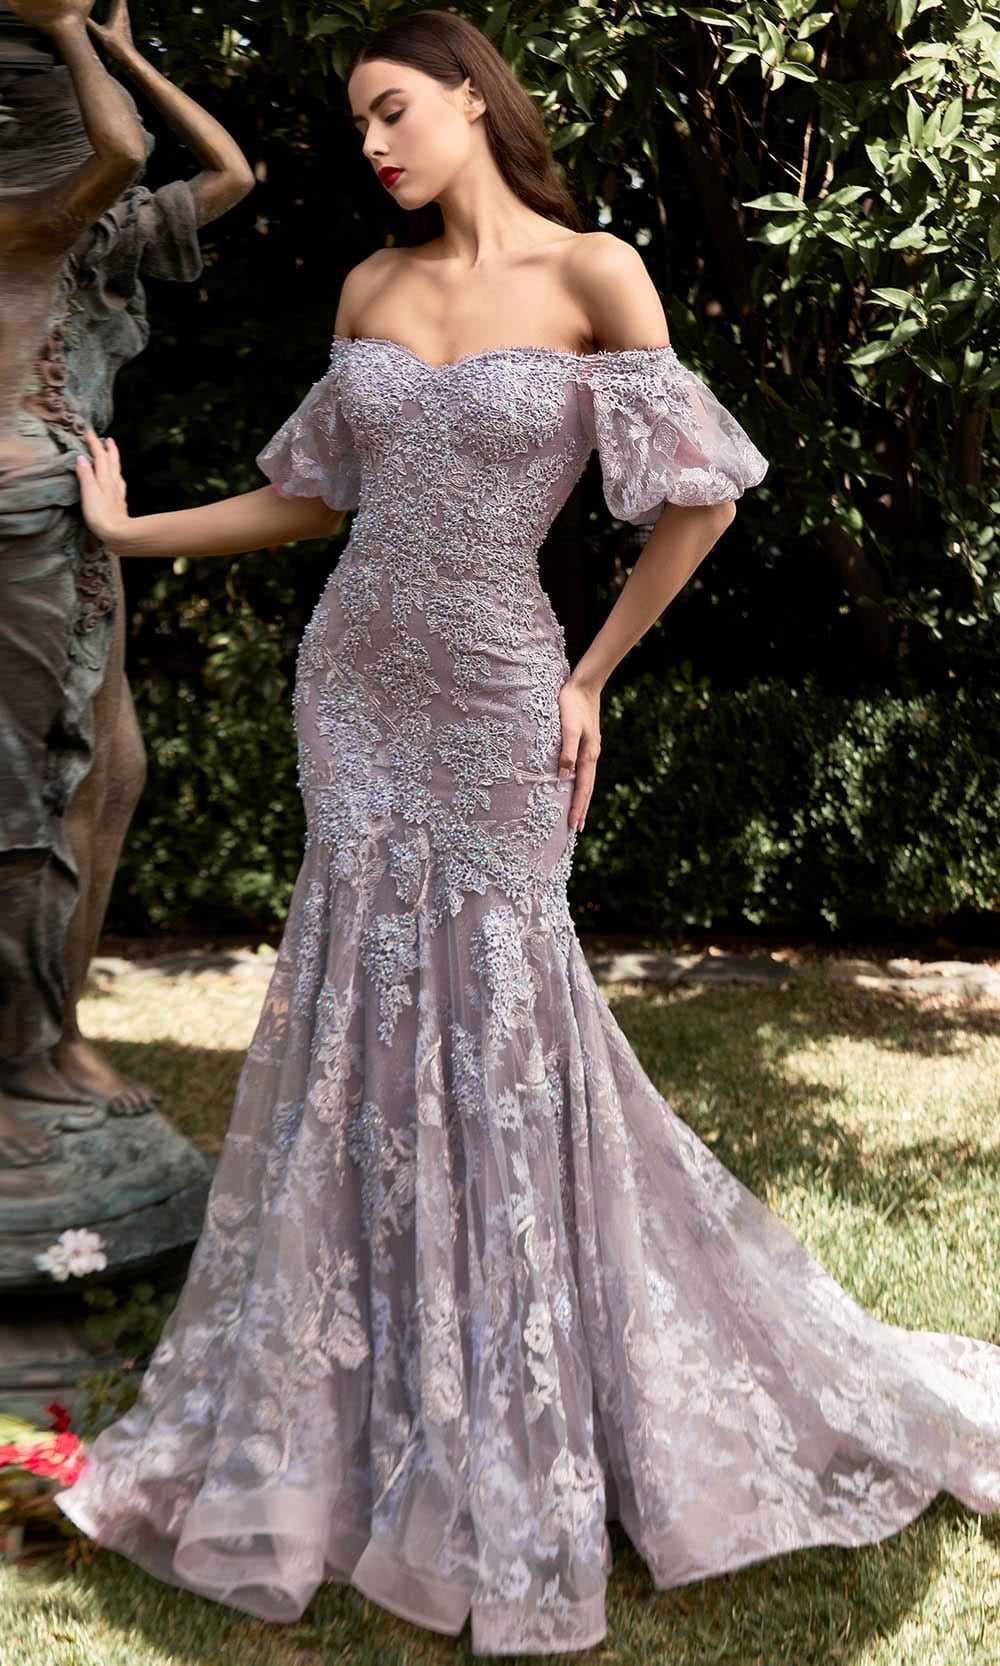 Cinderella Divine, Cinderella Divine CD959 - Fit And Flare Prom Gown